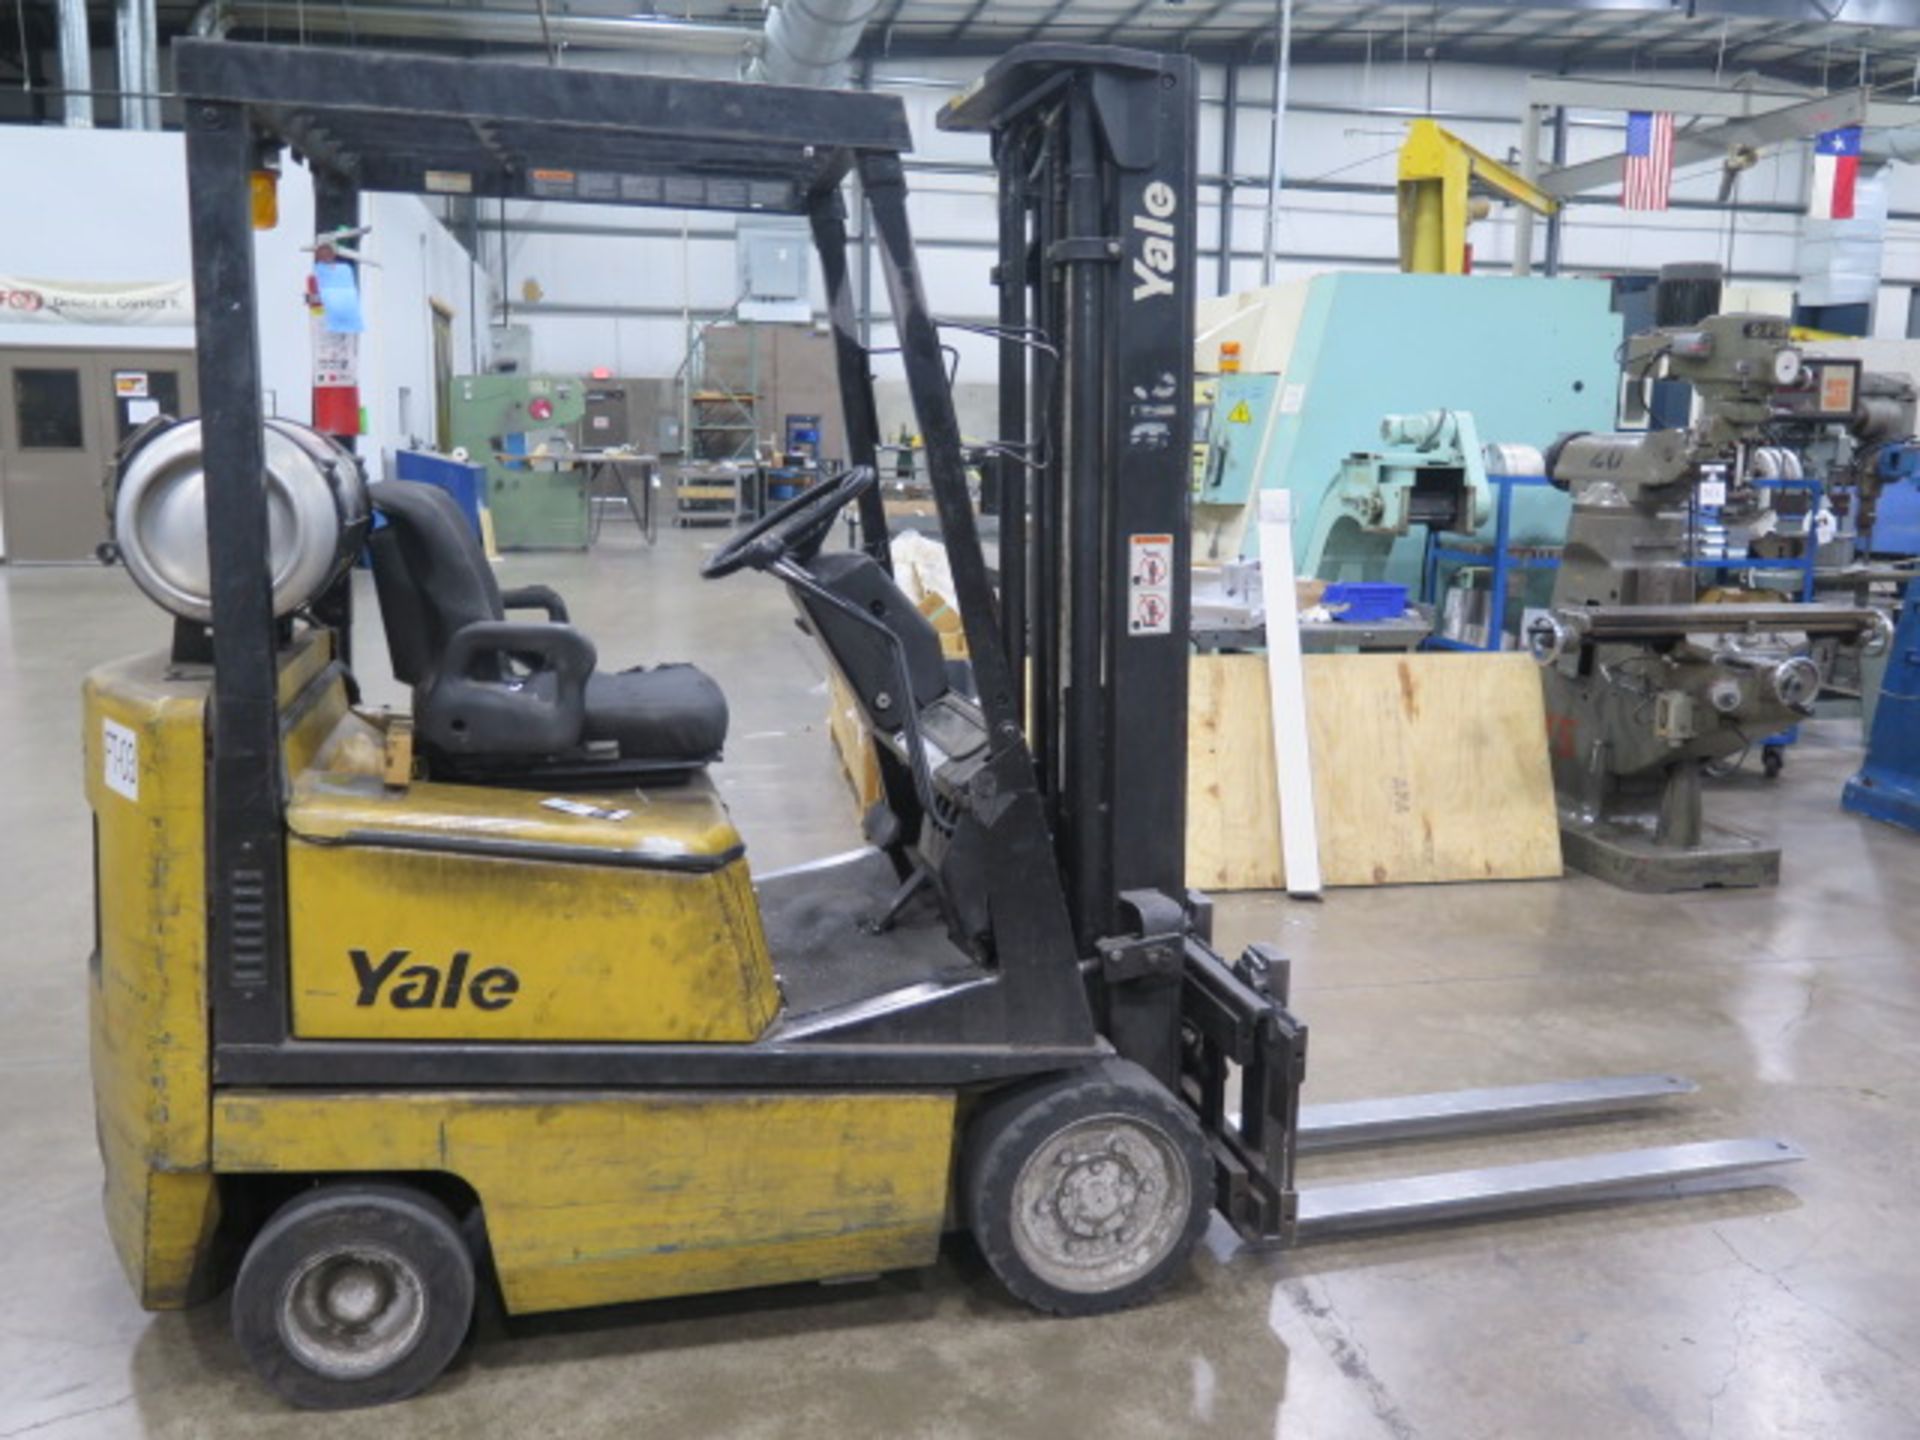 Yale GLC030CENUAE083 3000 Lb LPG Forklift s/n N542835 w/ 3-Stage Mast, 190” Lift Height, SOLD AS IS - Image 3 of 11